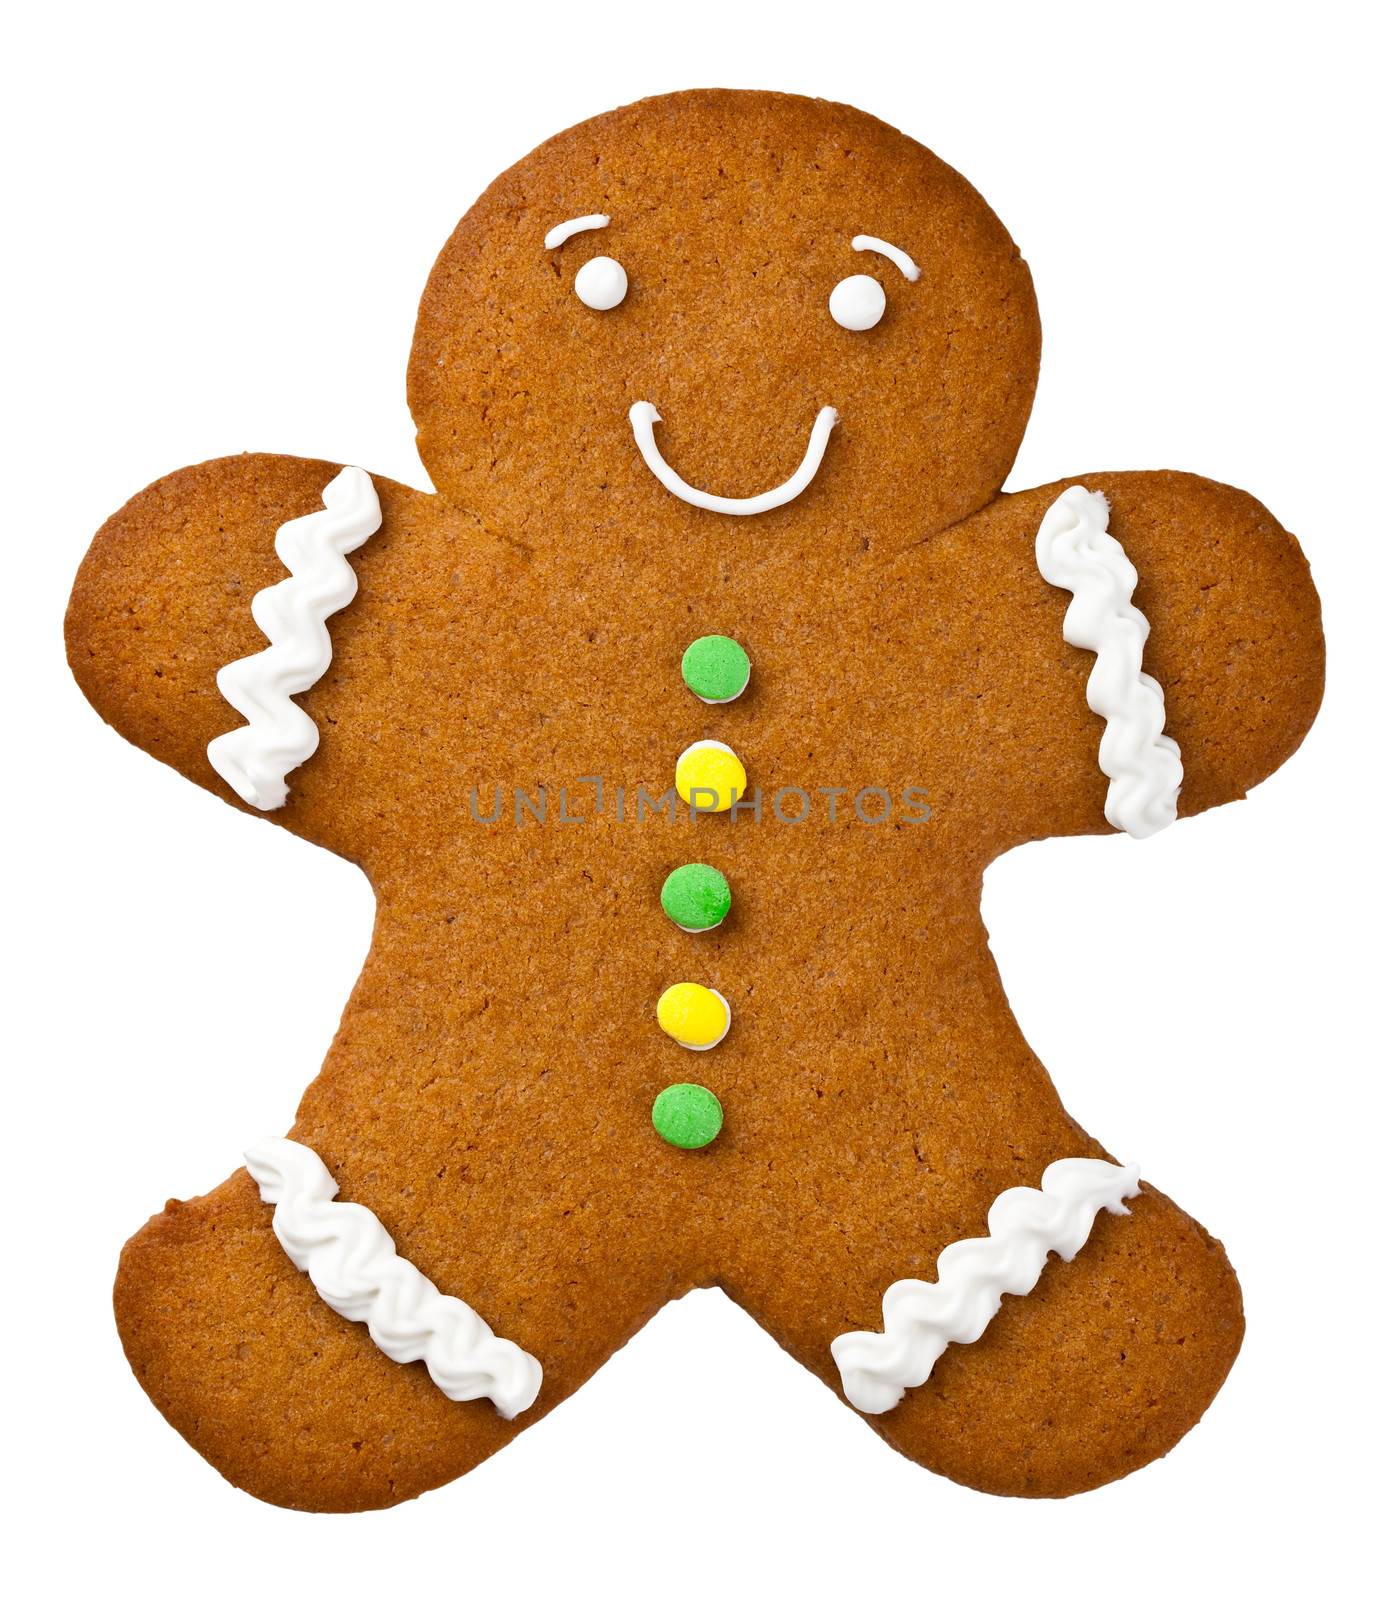 Gingerbread Man by bozena_fulawka